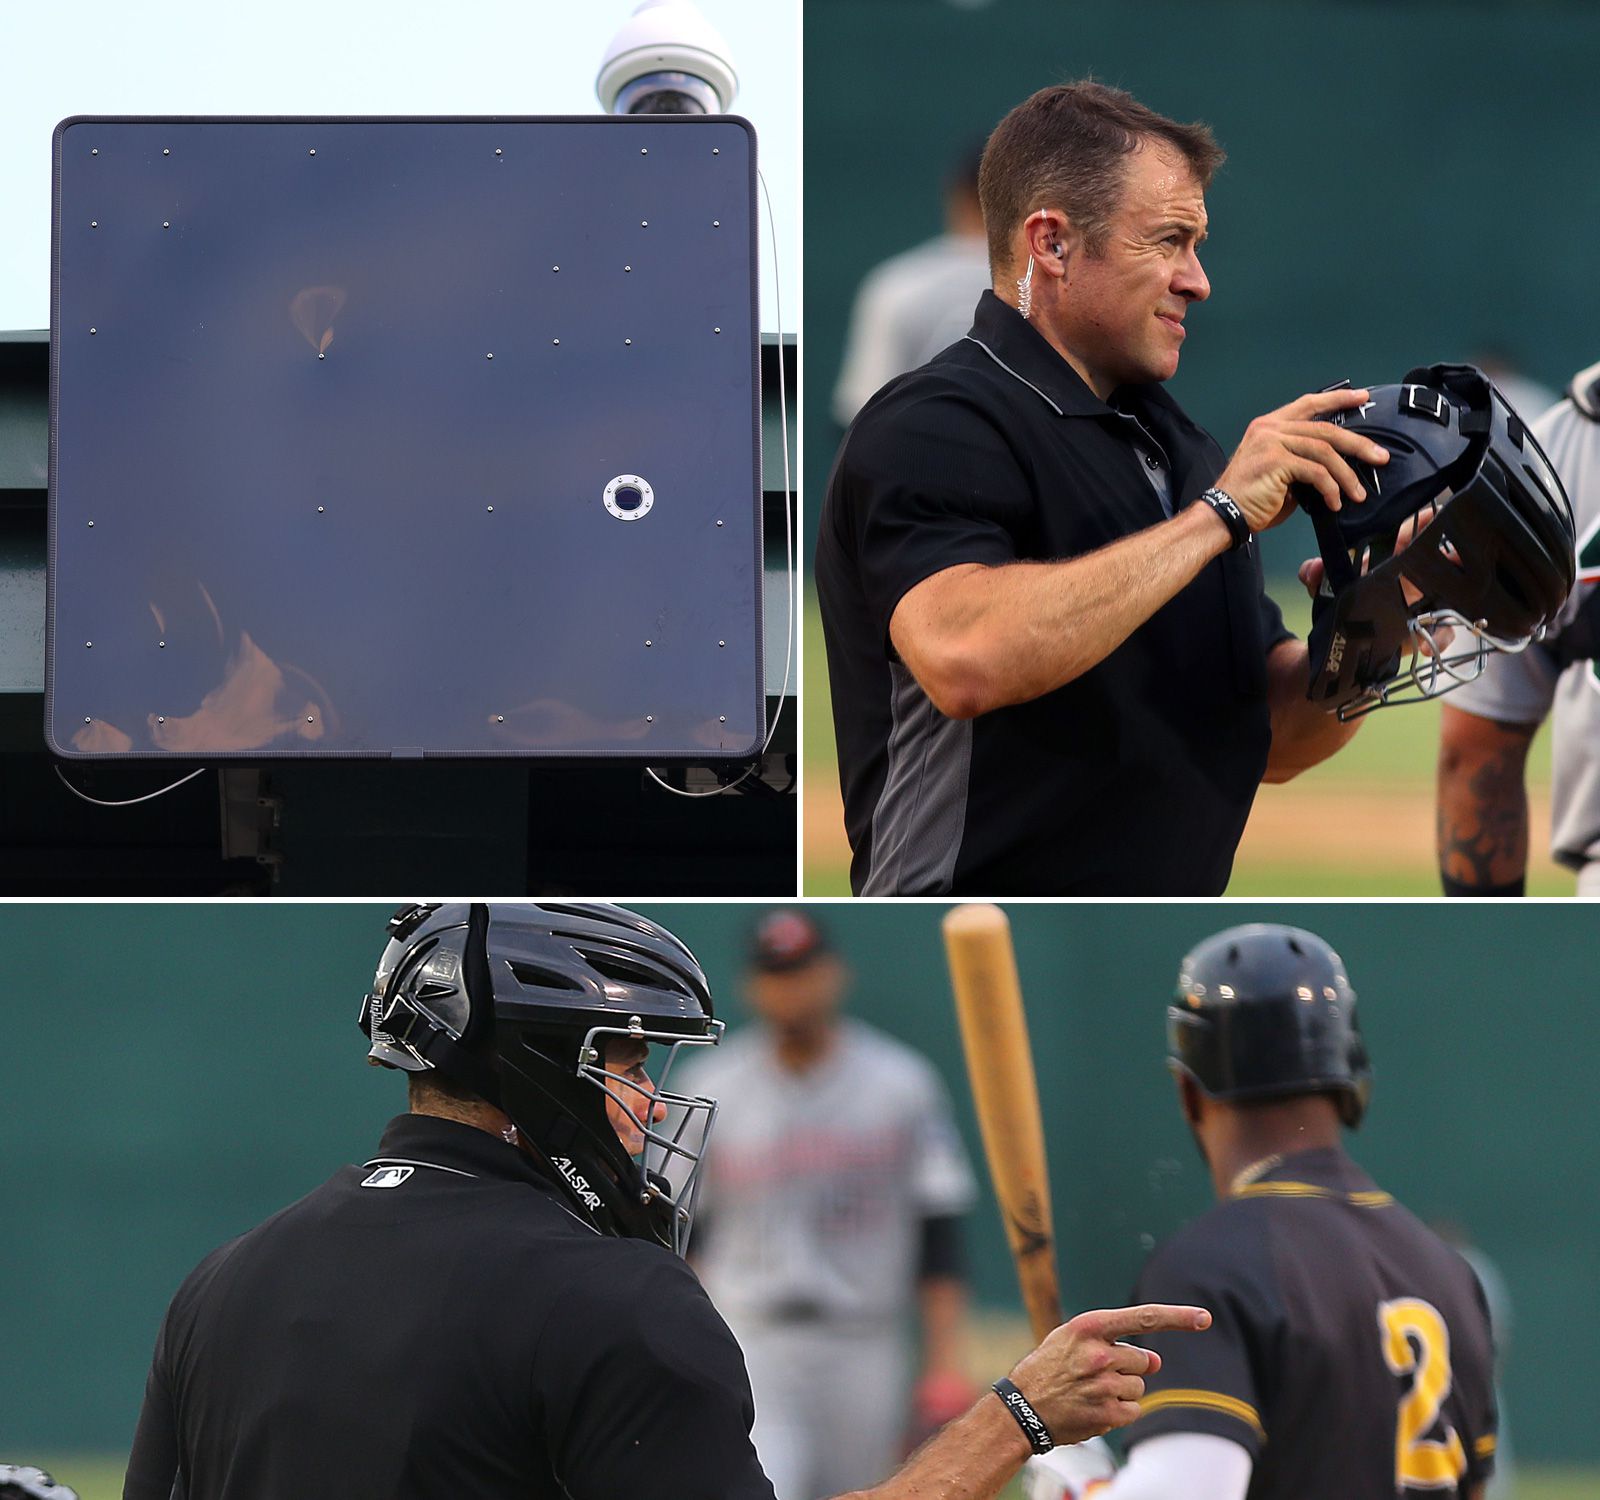 Atlantic League introduces 'robot umpires' to baseball - The Washington Post